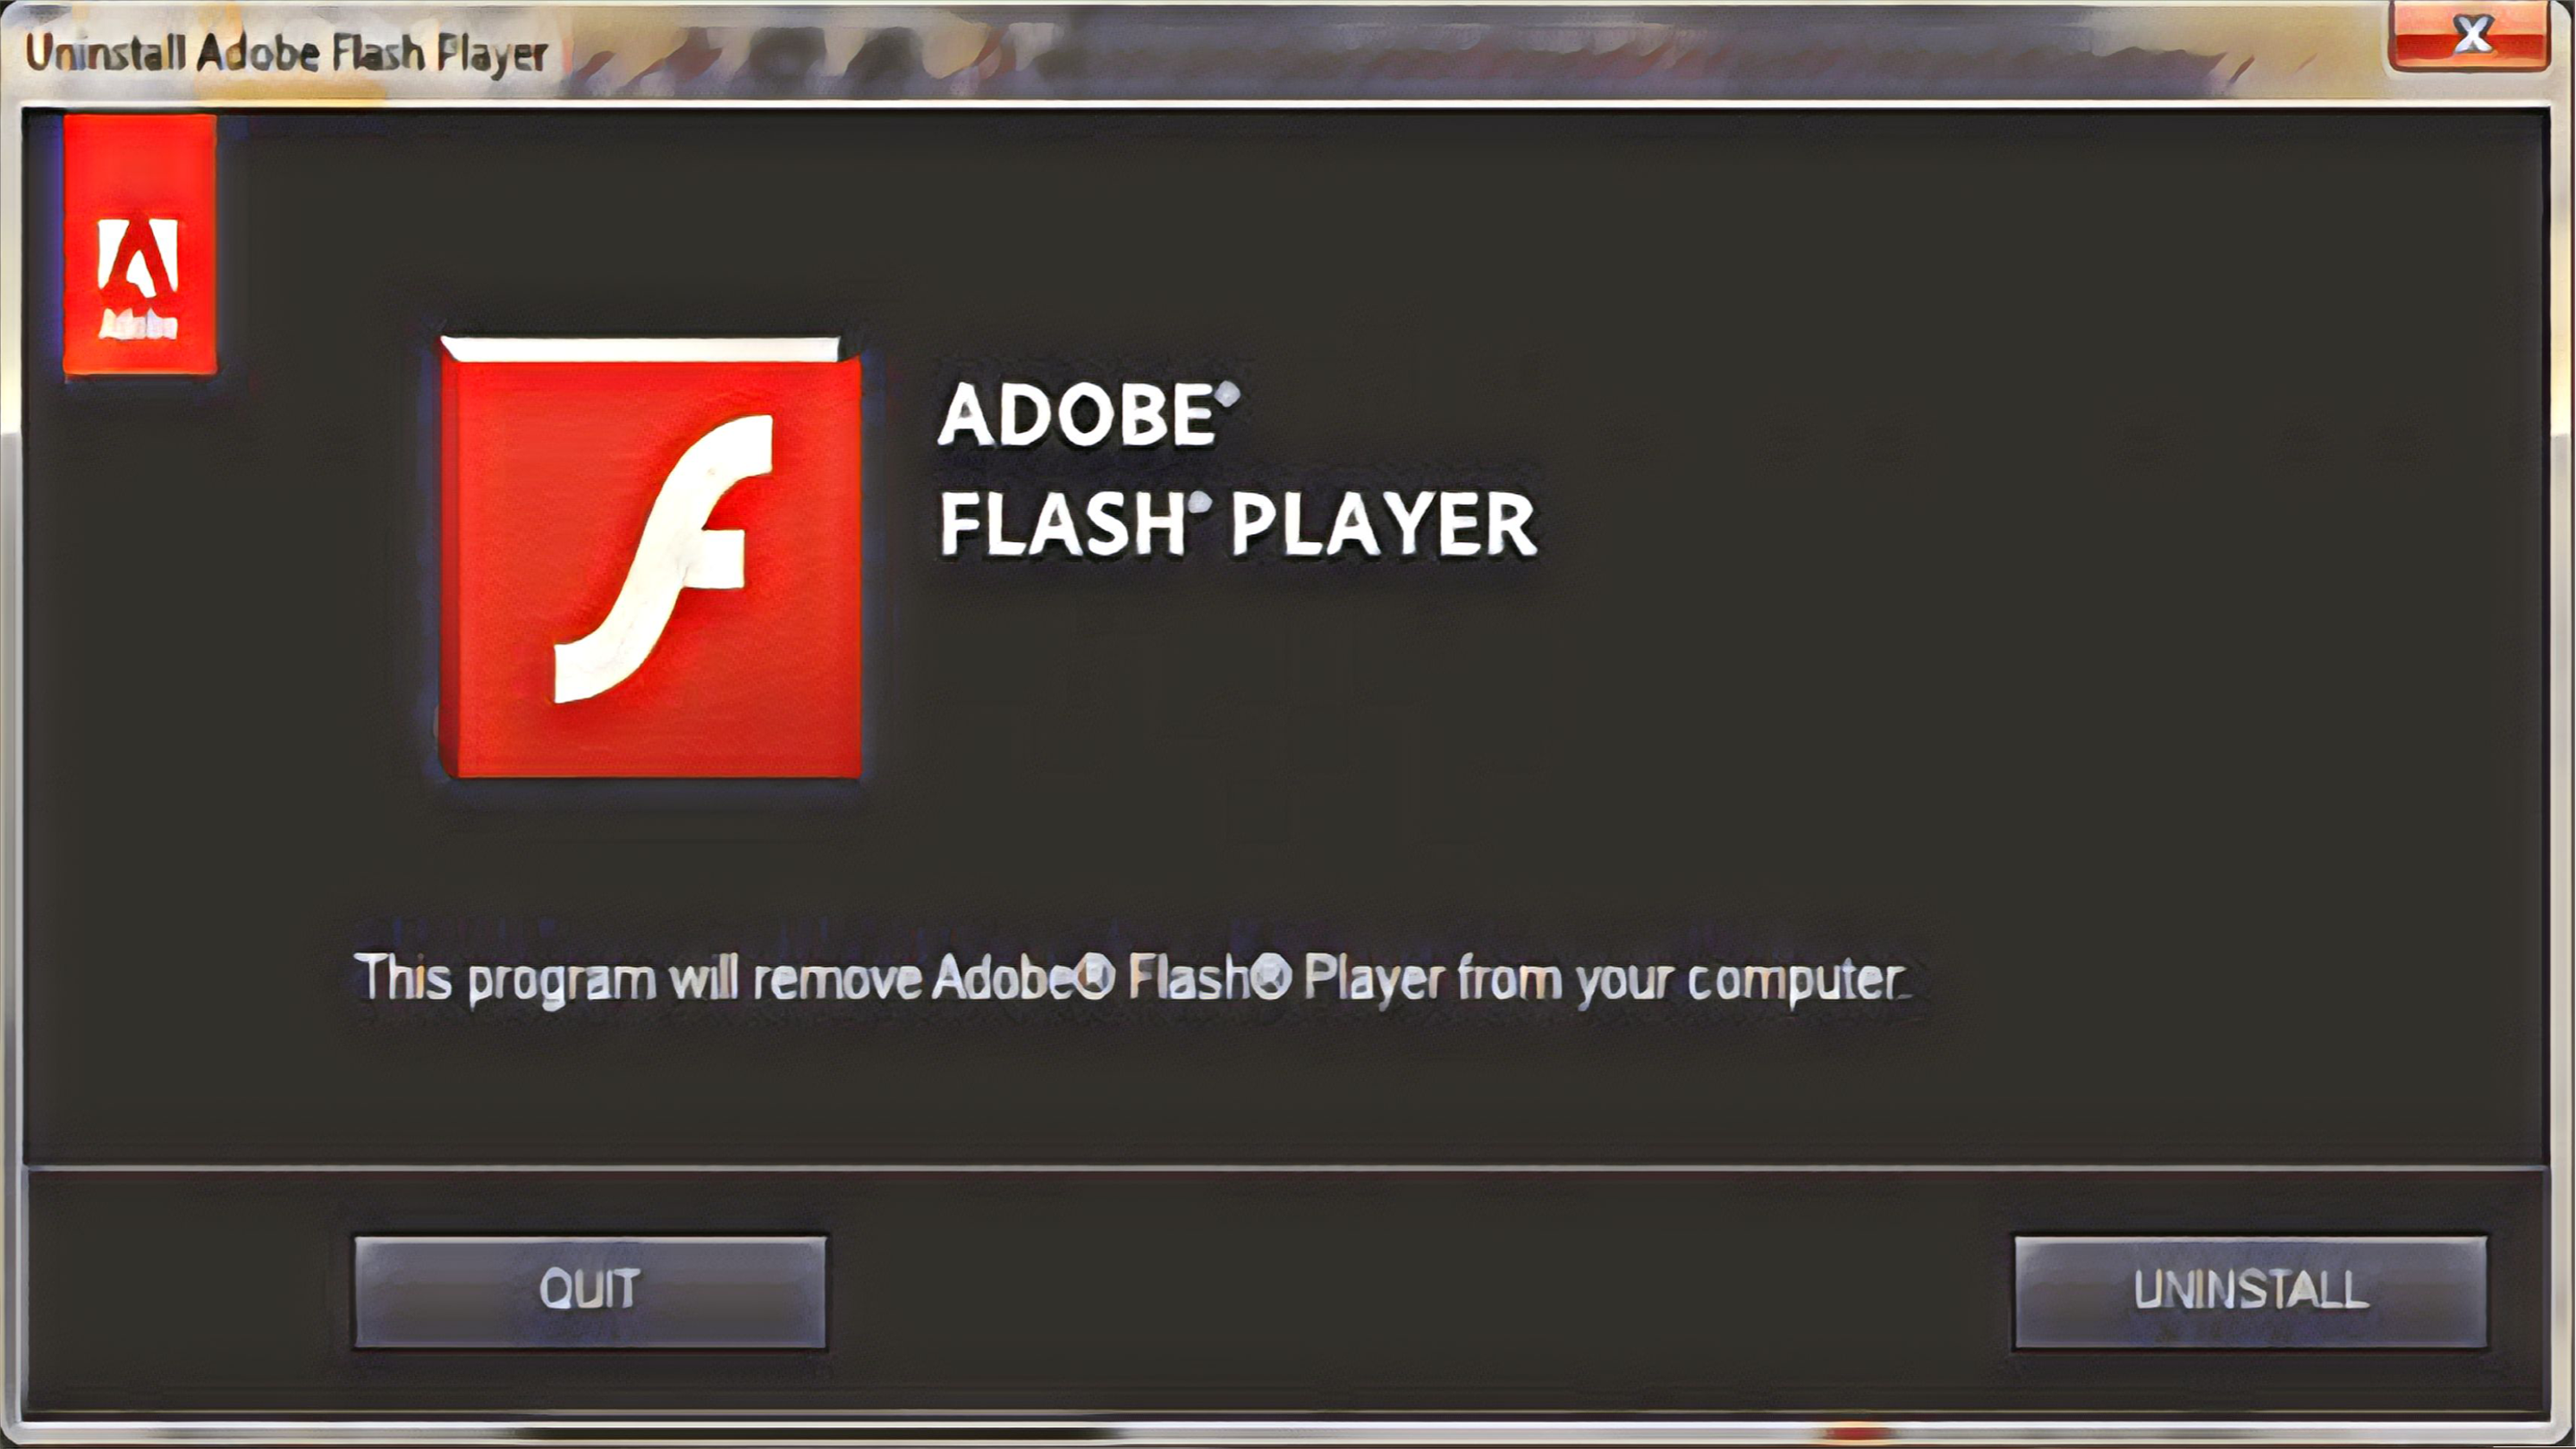 adobe uninstall flash player message